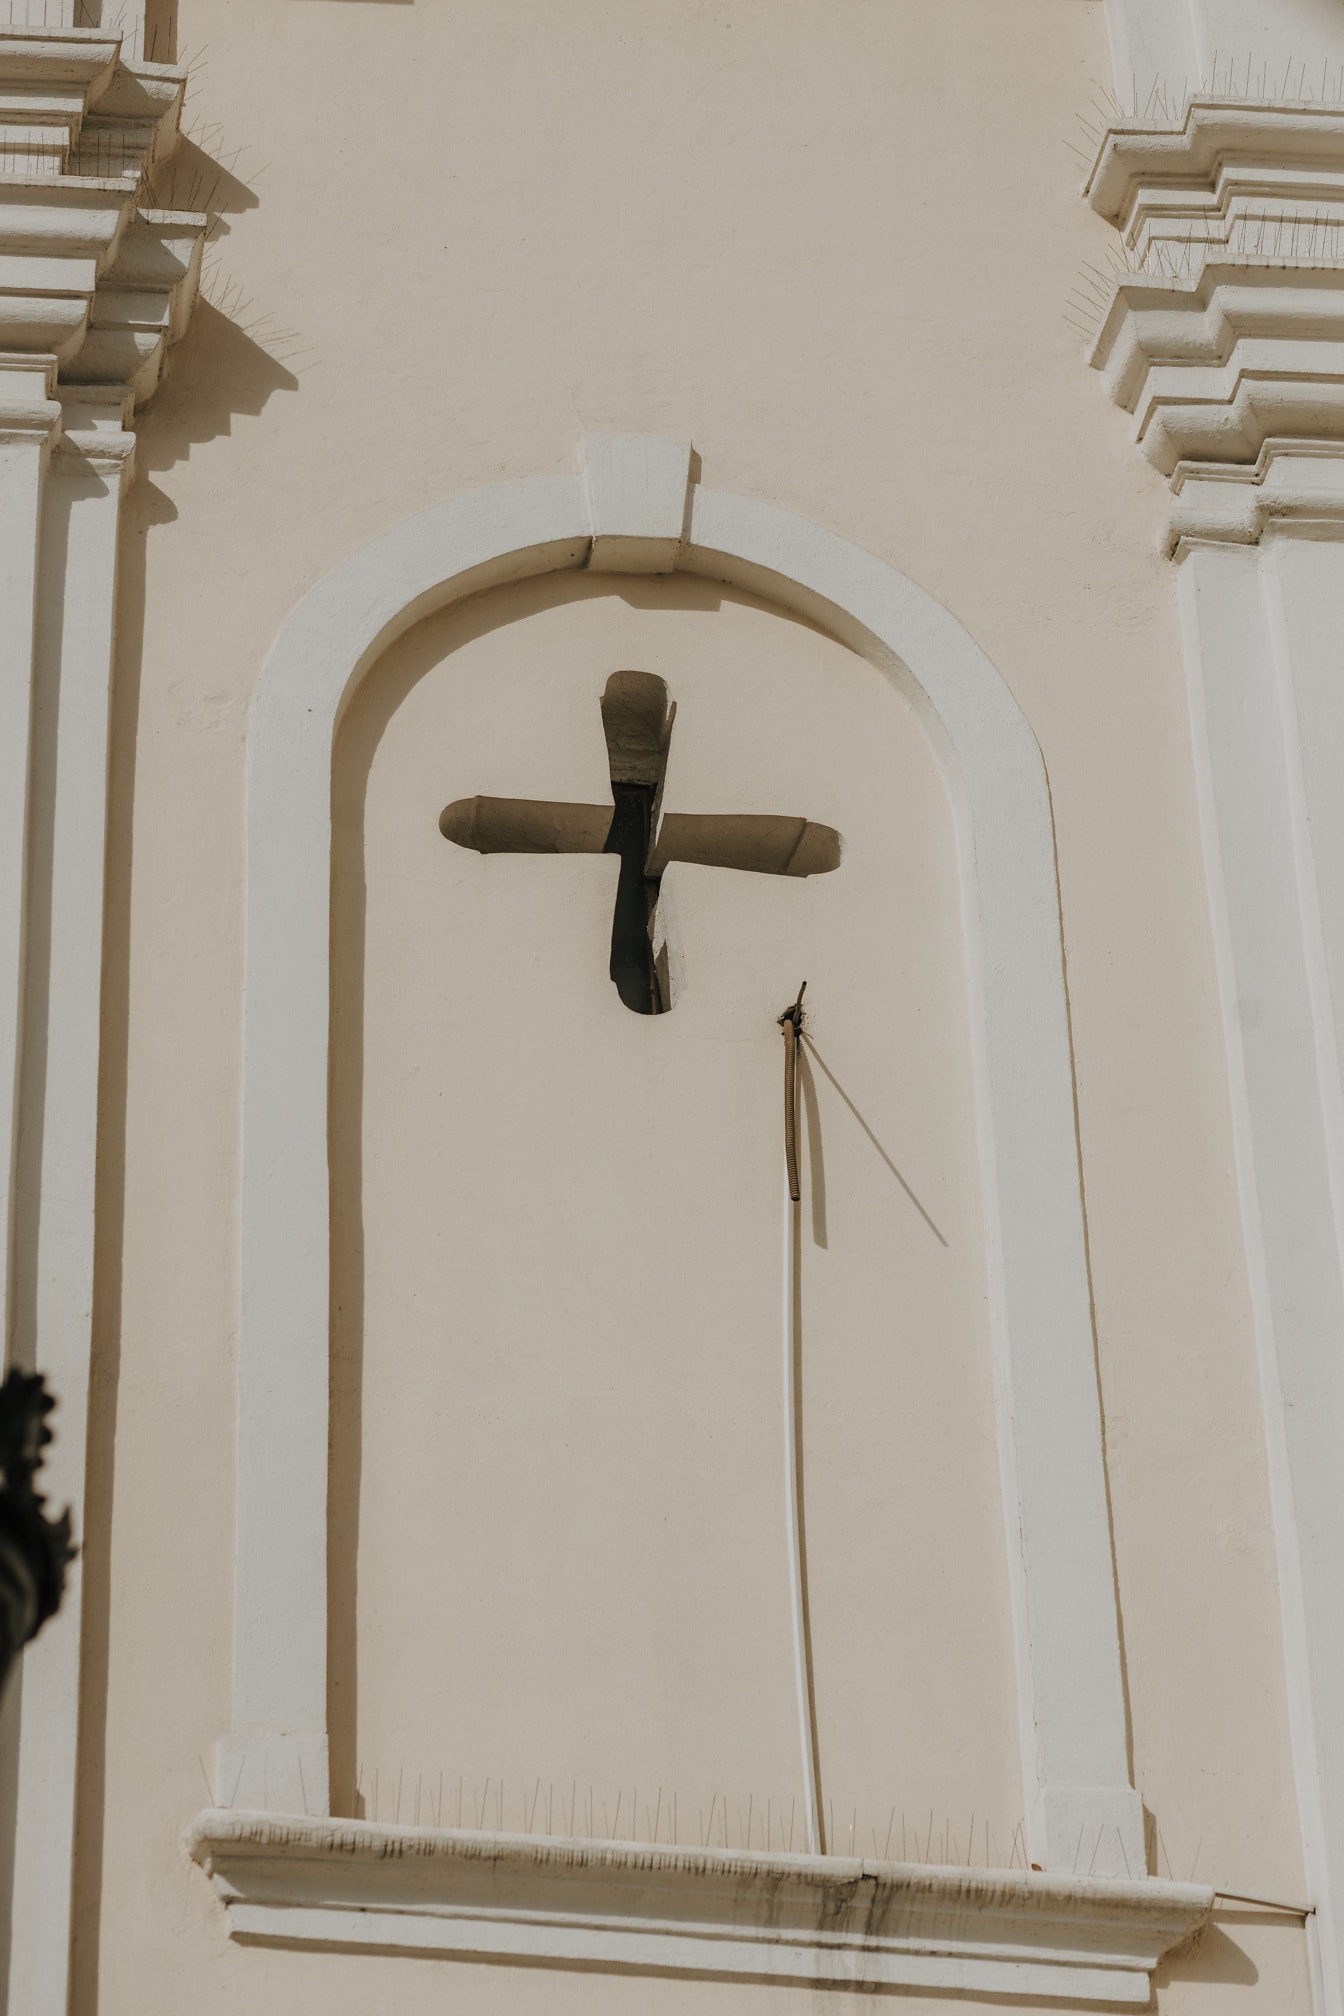 Kršćanski ukras u obliku križa na zidu